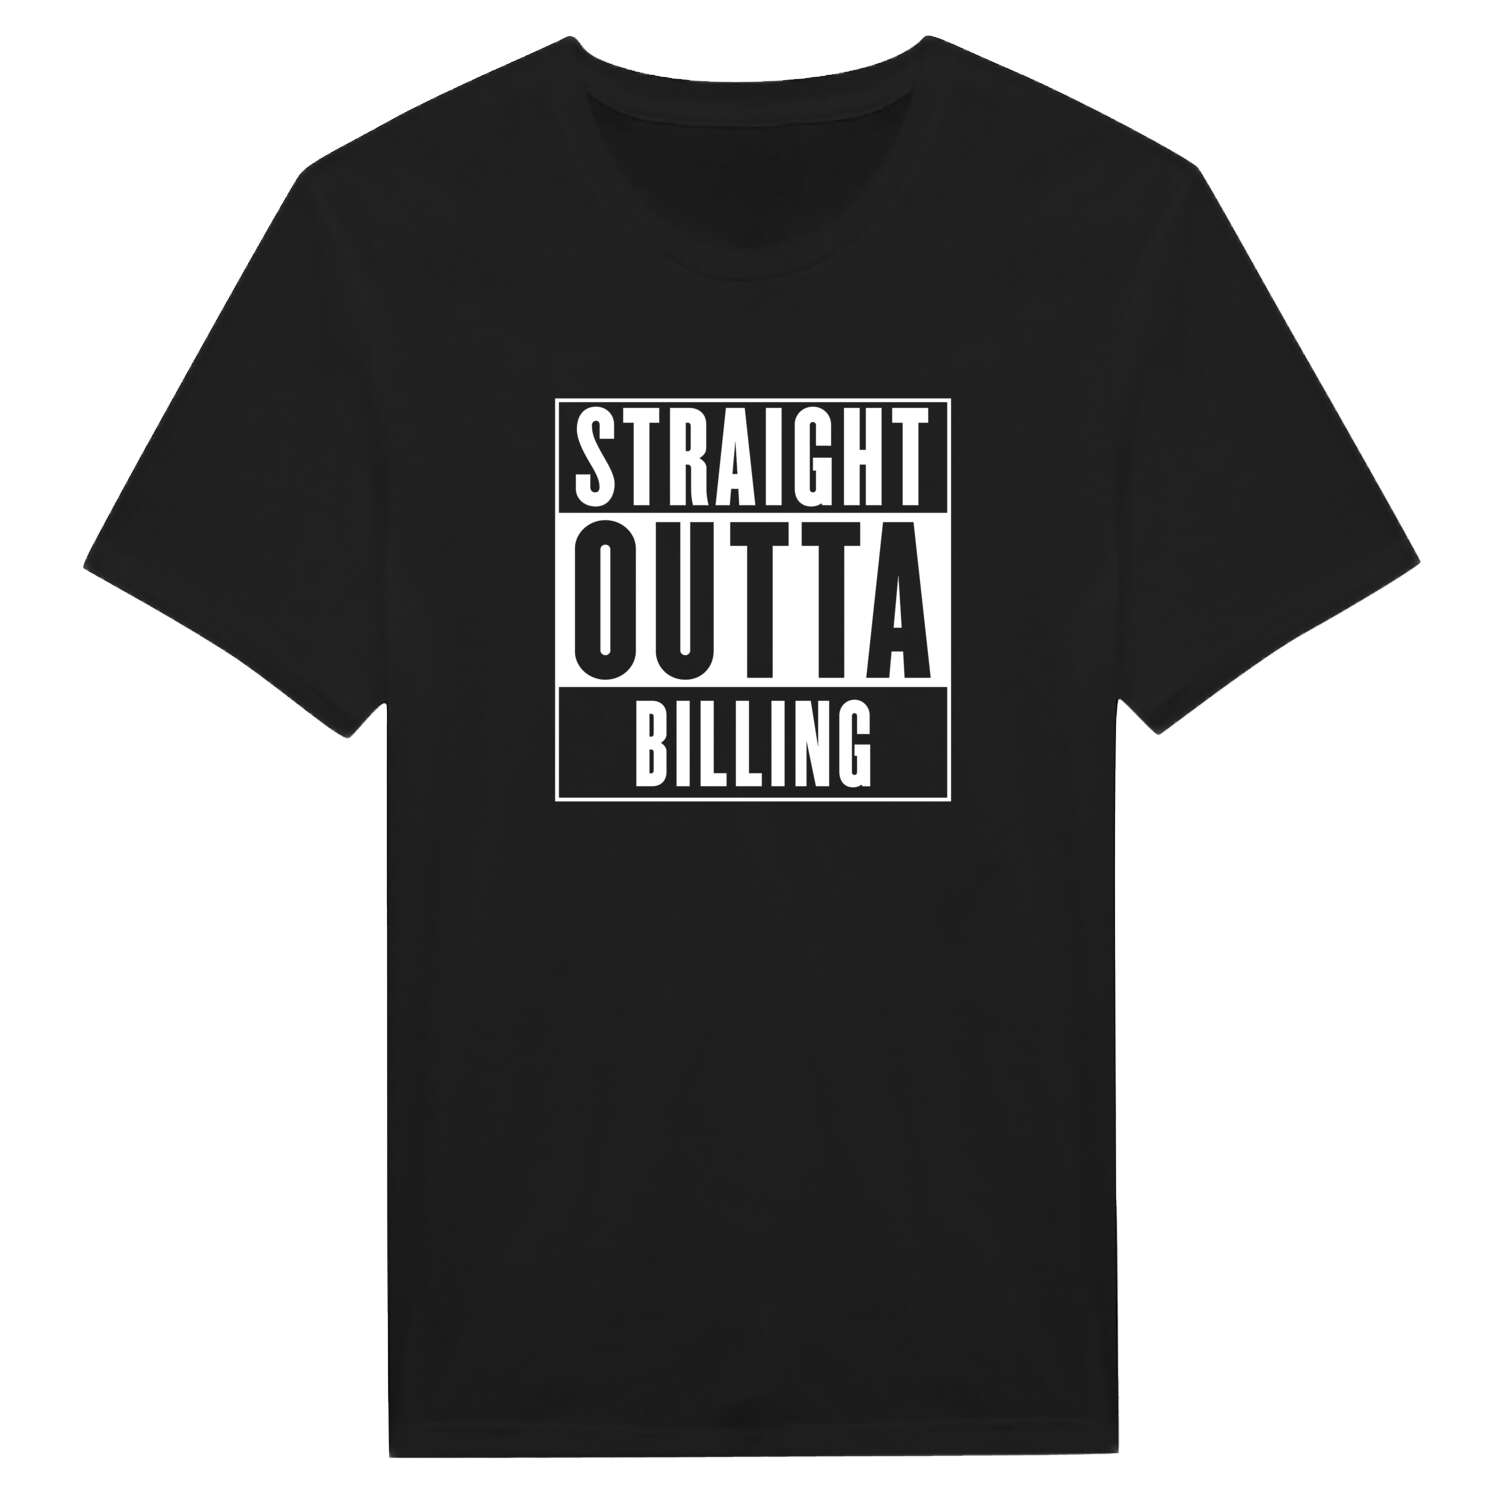 Billing T-Shirt »Straight Outta«